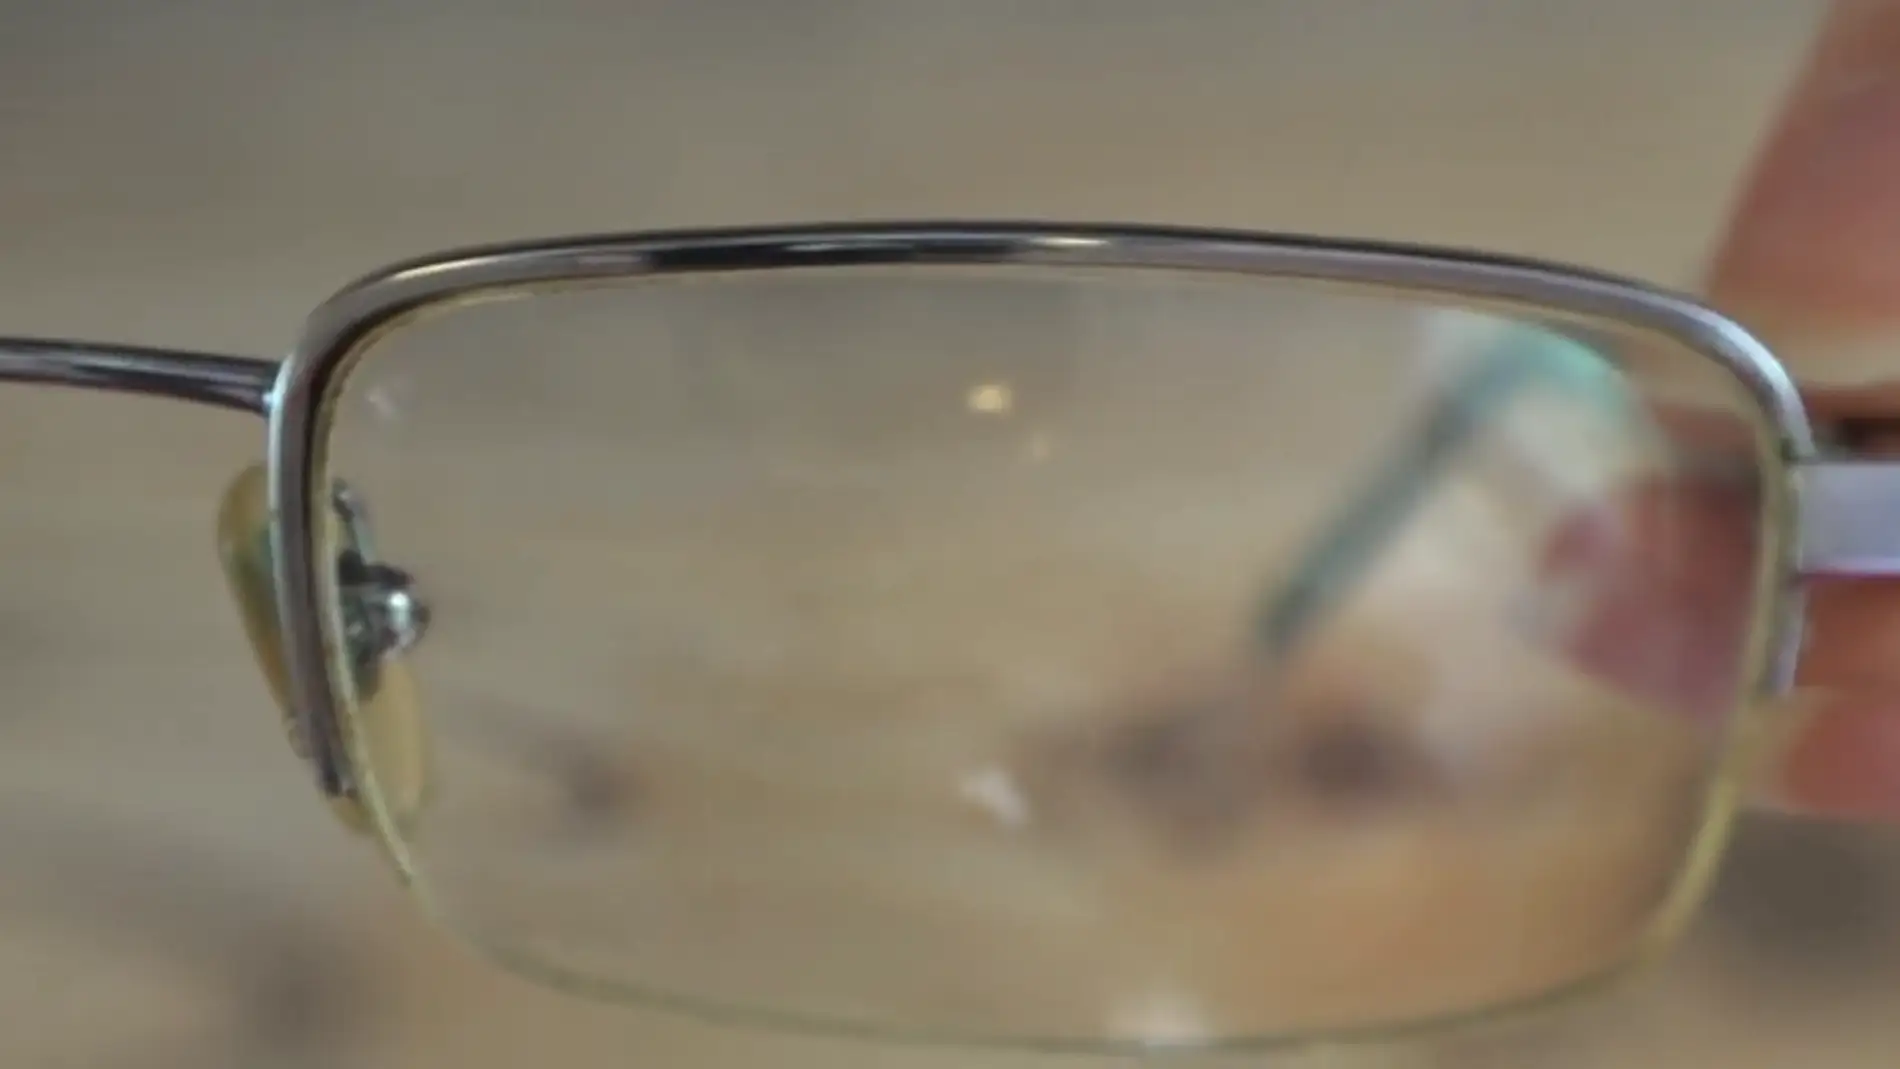 Tips para cuidar tus gafas y evitar que se rayen, rompan o se empañen